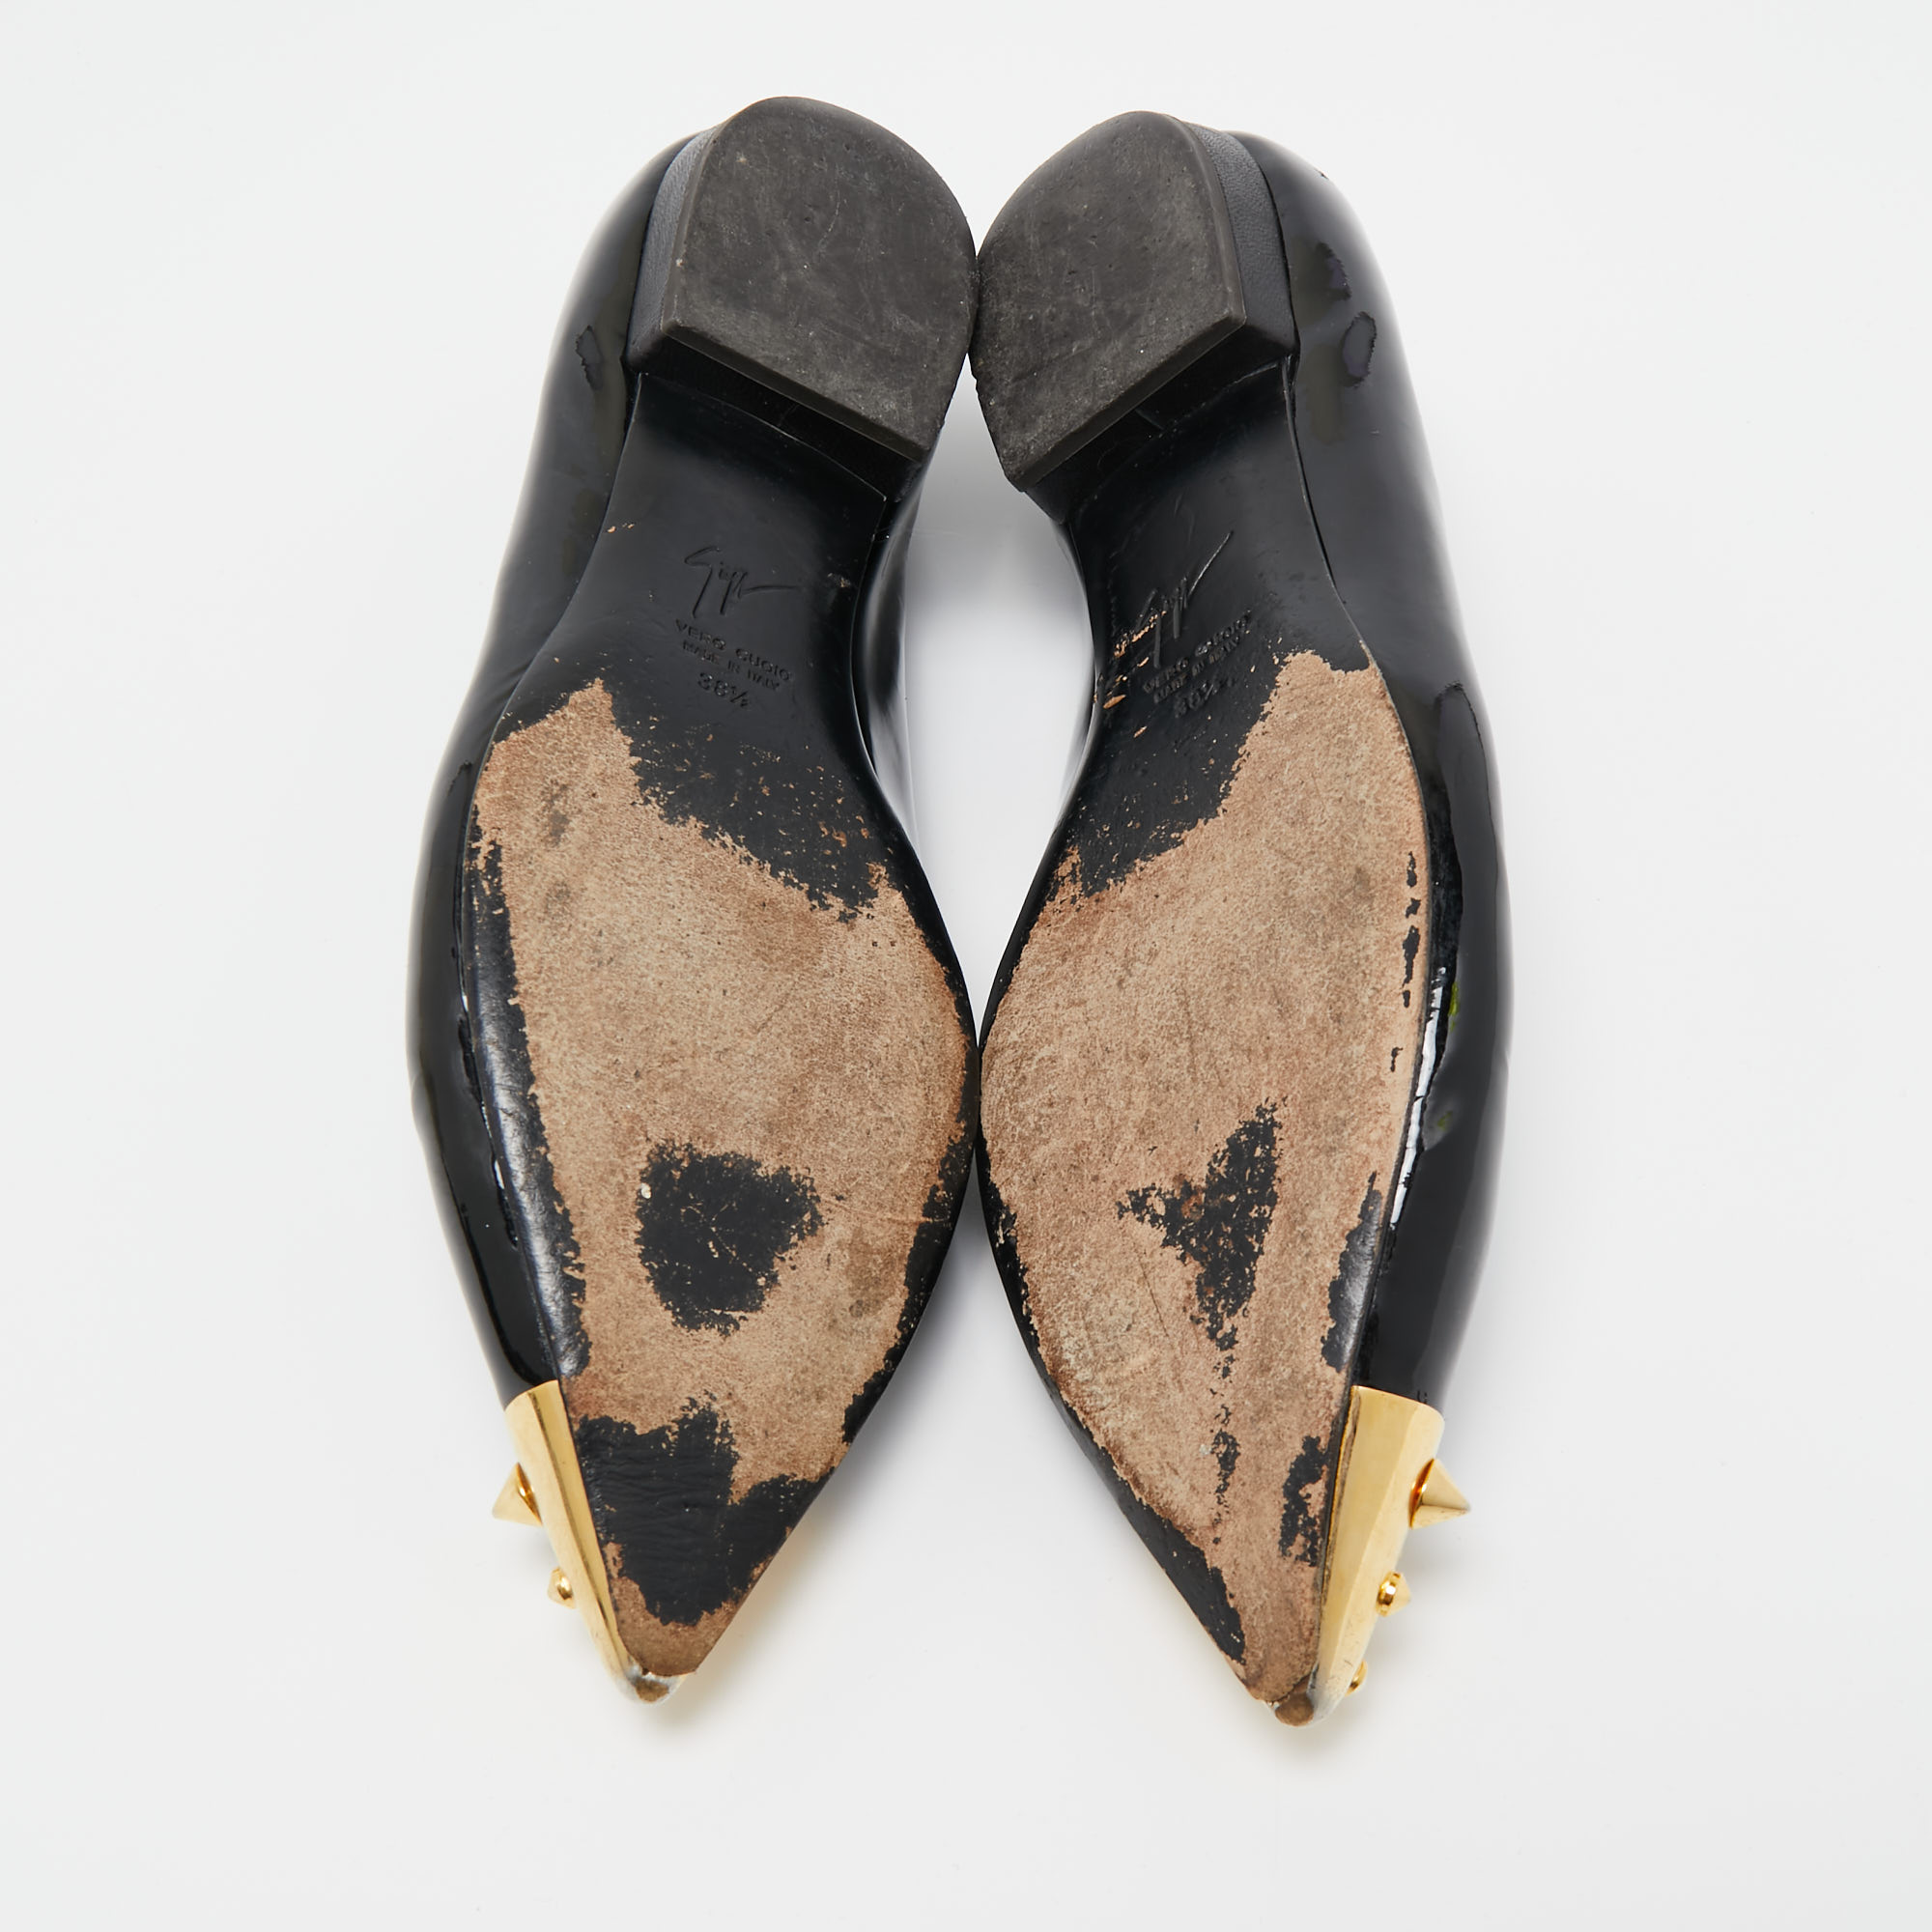 Giuseppe Zanotti Black Patent Leather Spiked Cap Toe Ballet Flats Size 38.5